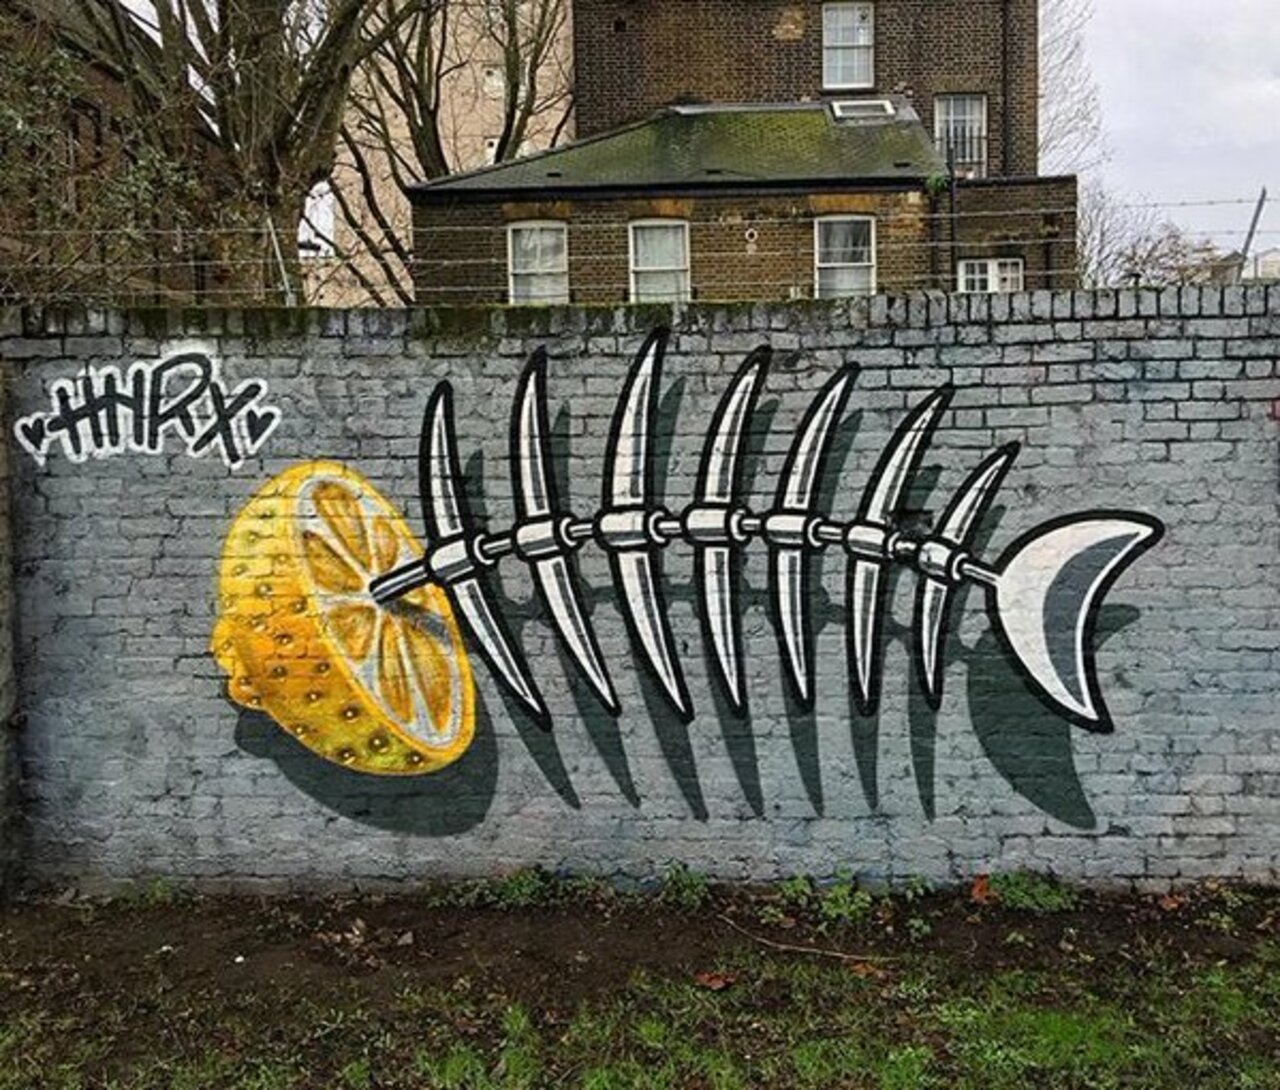 Street Art • Hnrx Found in Shoreditch, London #art #mural #graffiti #streetart https://t.co/8cTUi8pn0c